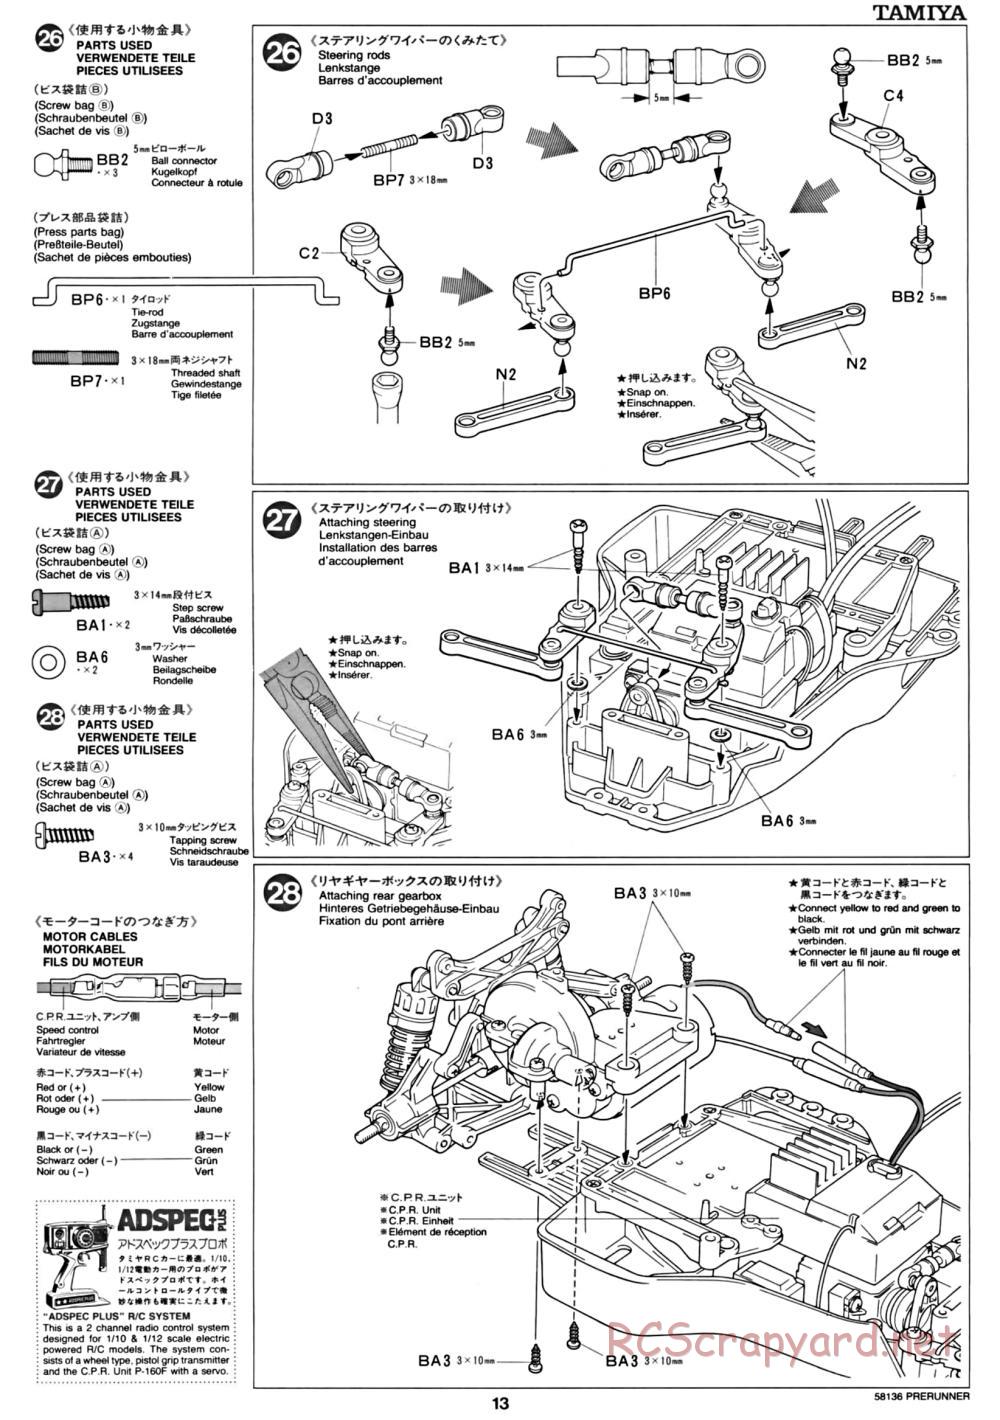 Tamiya - Toyota Prerunner Chassis - Manual - Page 13